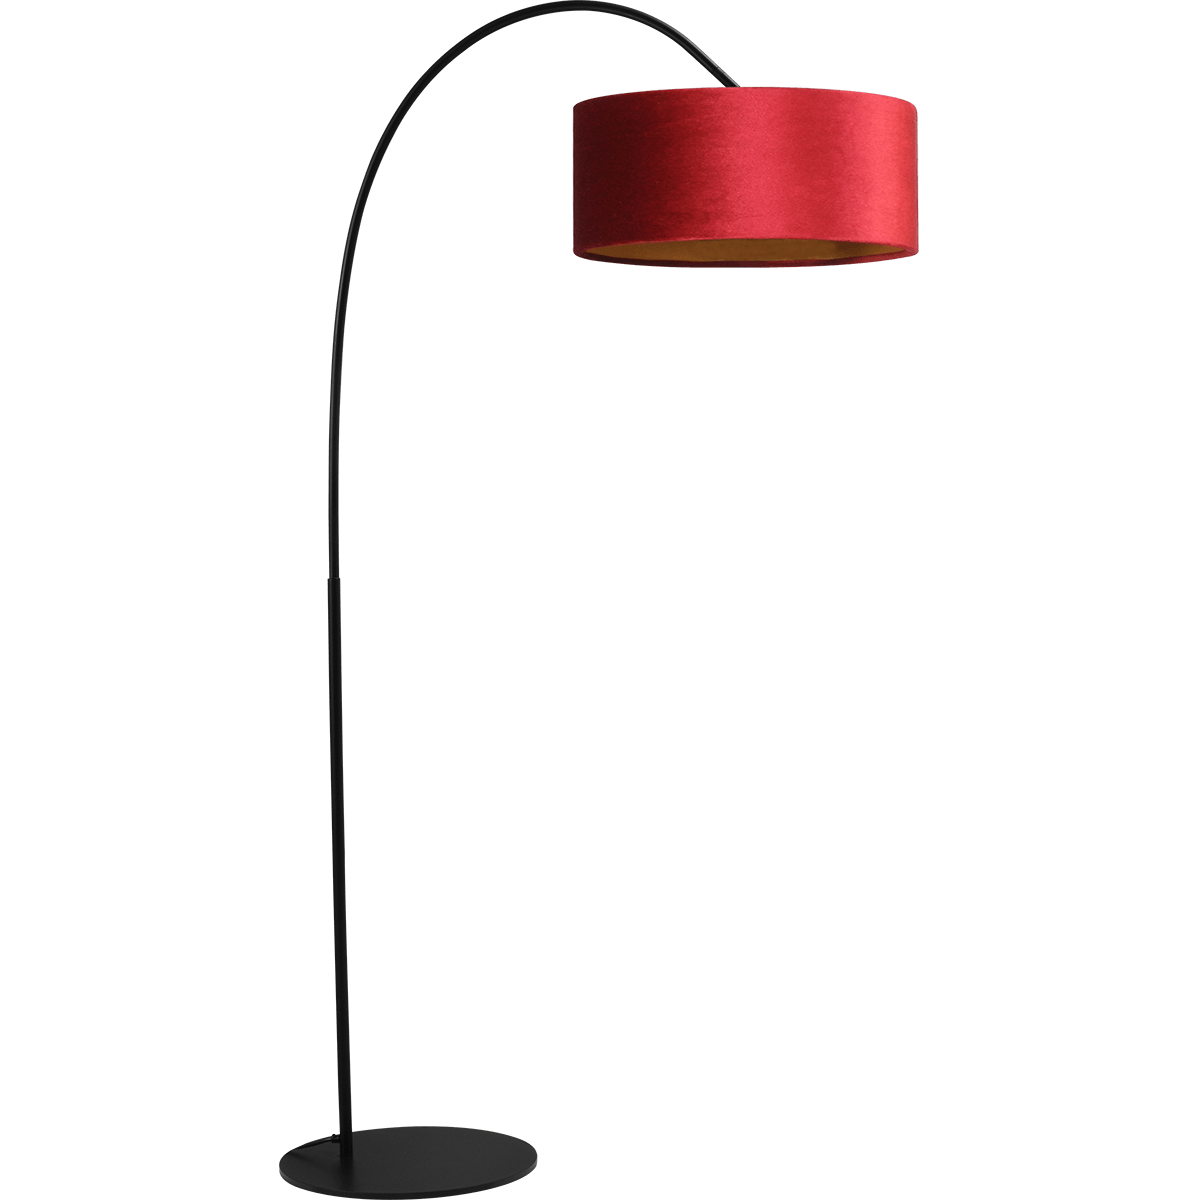 prieel Alsjeblieft kijk compleet Vloerlamp Arch black, mat zwart, hoogte 183 cm, breedte 88 cm inclusief rode  lampenkap, MASTERLIGHT - 1205-05-6580-03-52 - Webo Verlichting